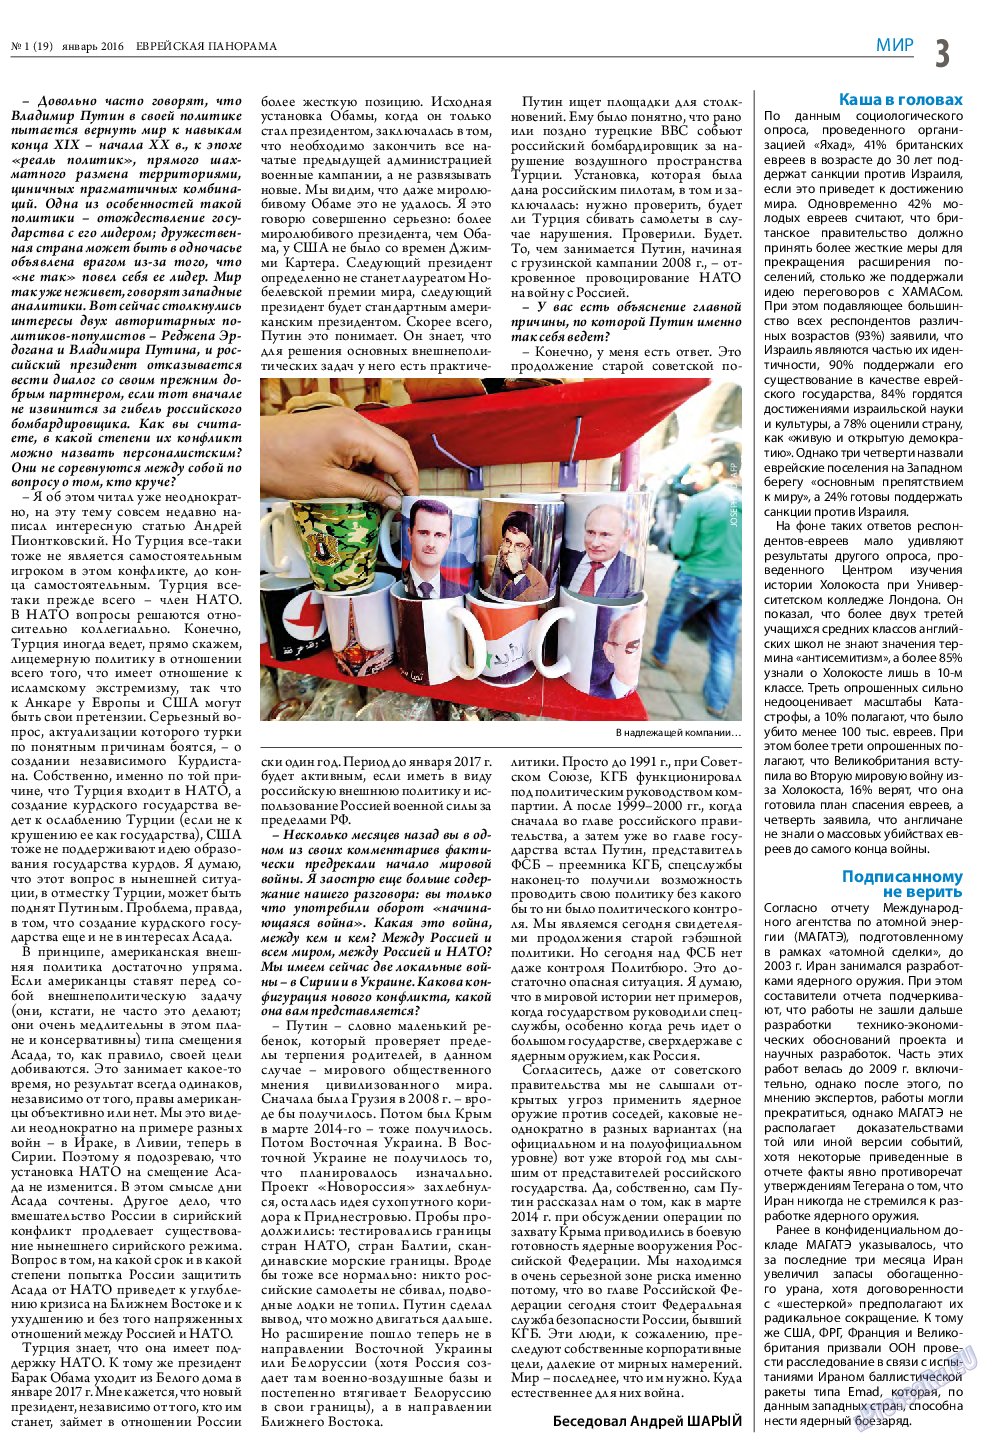 Еврейская панорама, газета. 2016 №1 стр.3